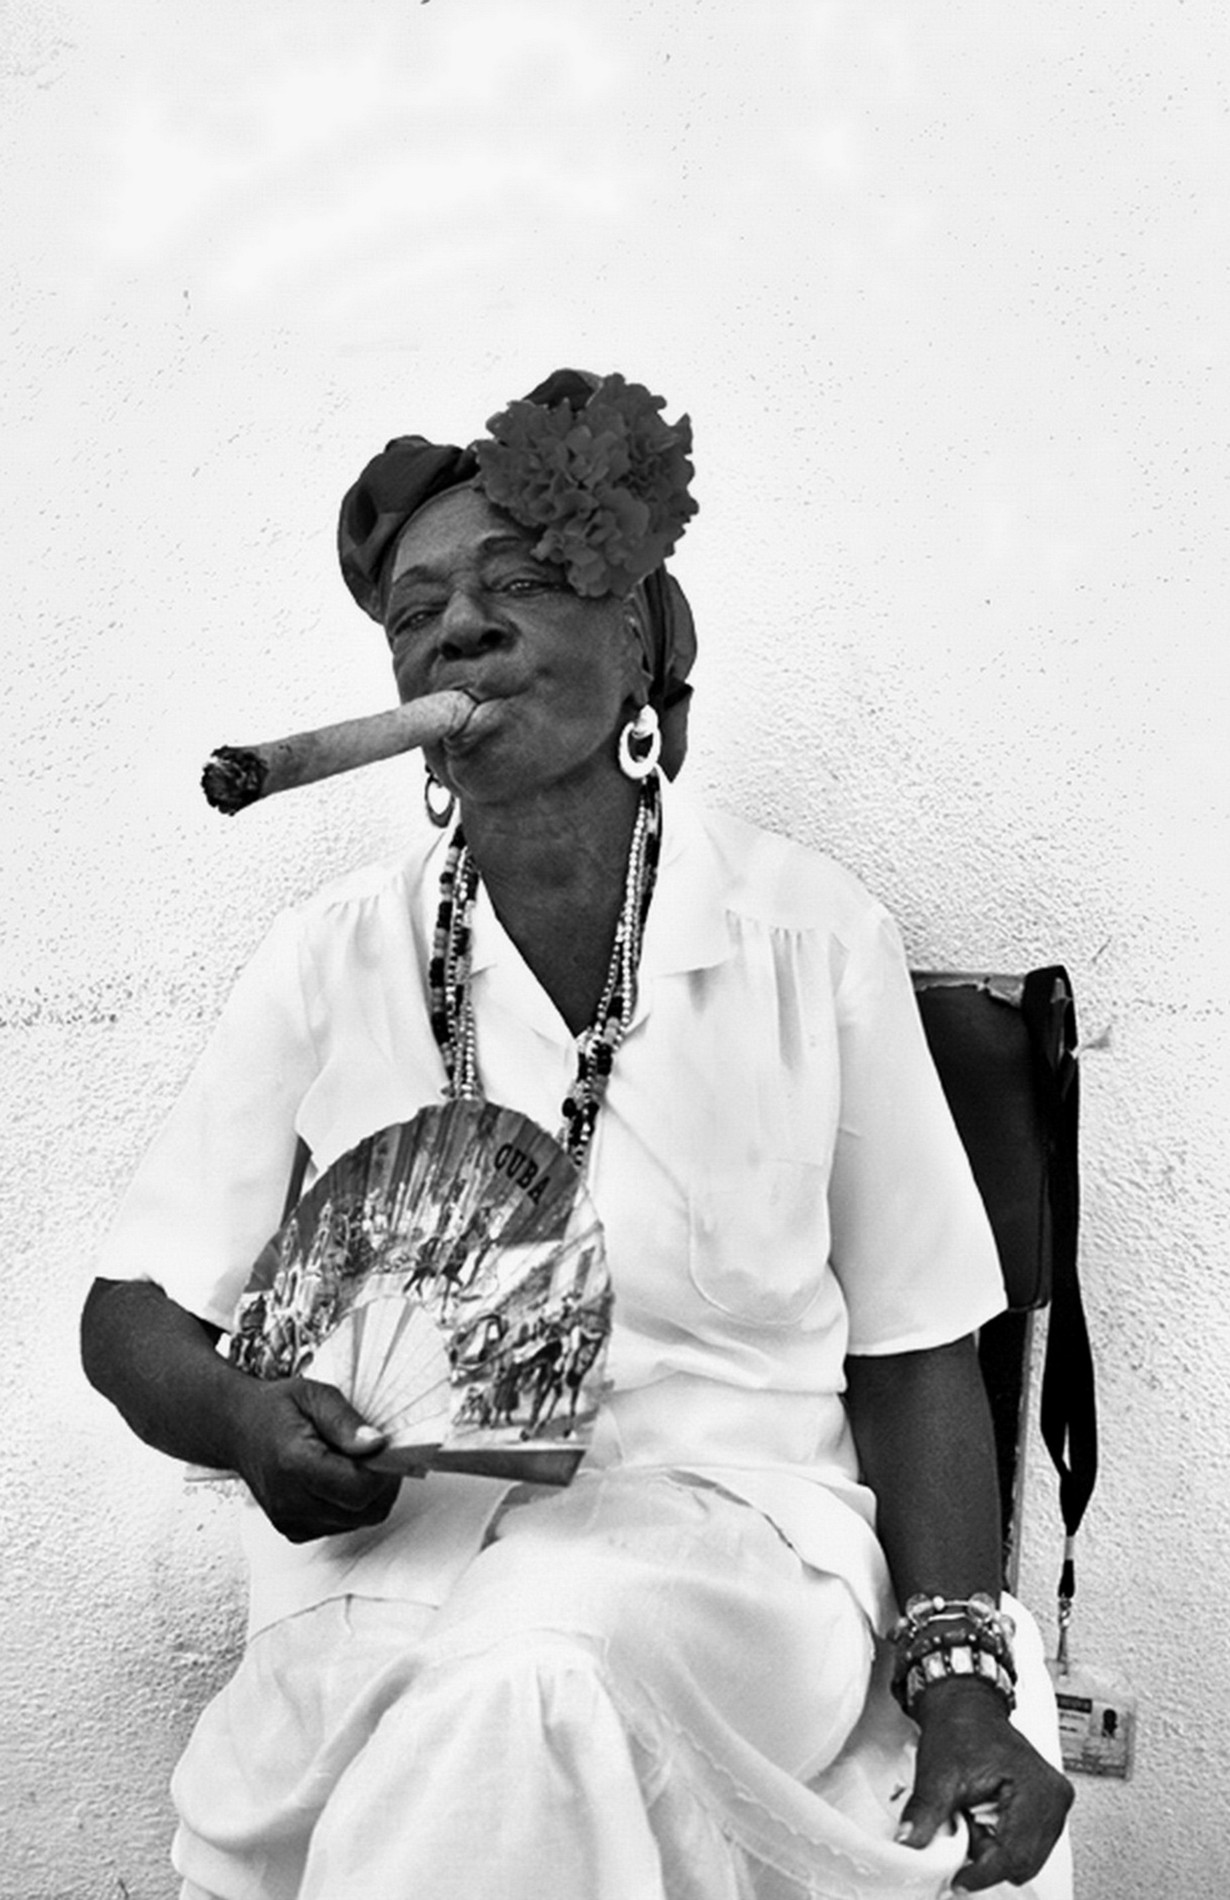 2 место в категории Люди среди профессионалов 2019. Дама с сигарой. Гавана, Куба. Автор Х. Аллен Беновиц